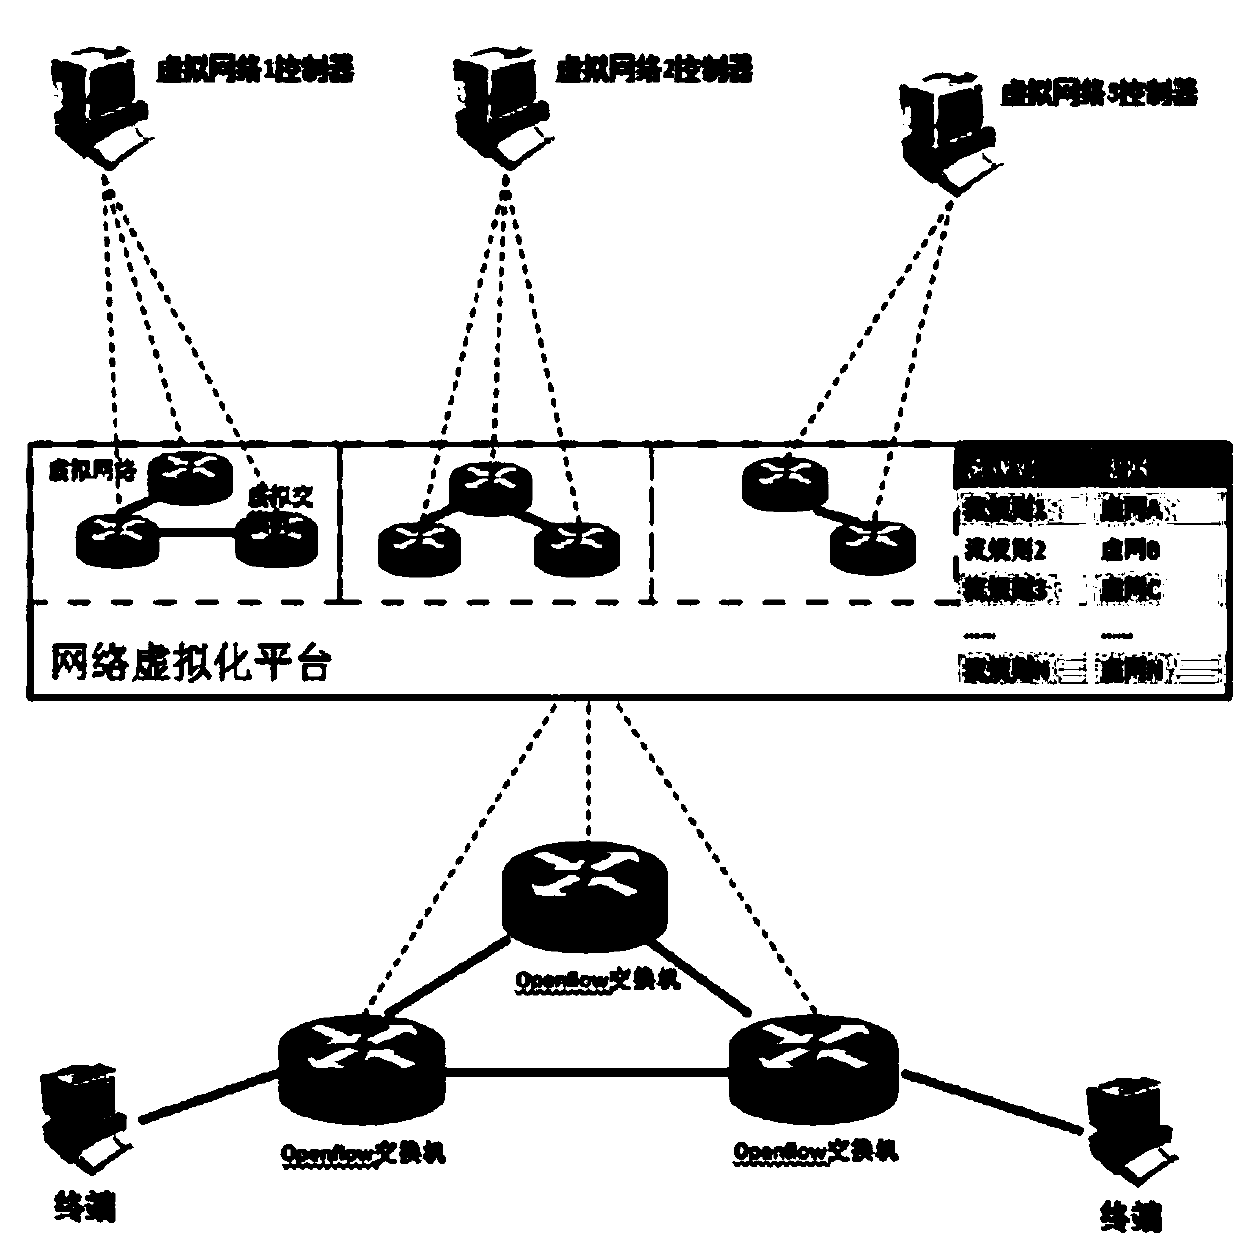 SDN virtualization platform uplink signaling flow label processing method based on OpenFlow